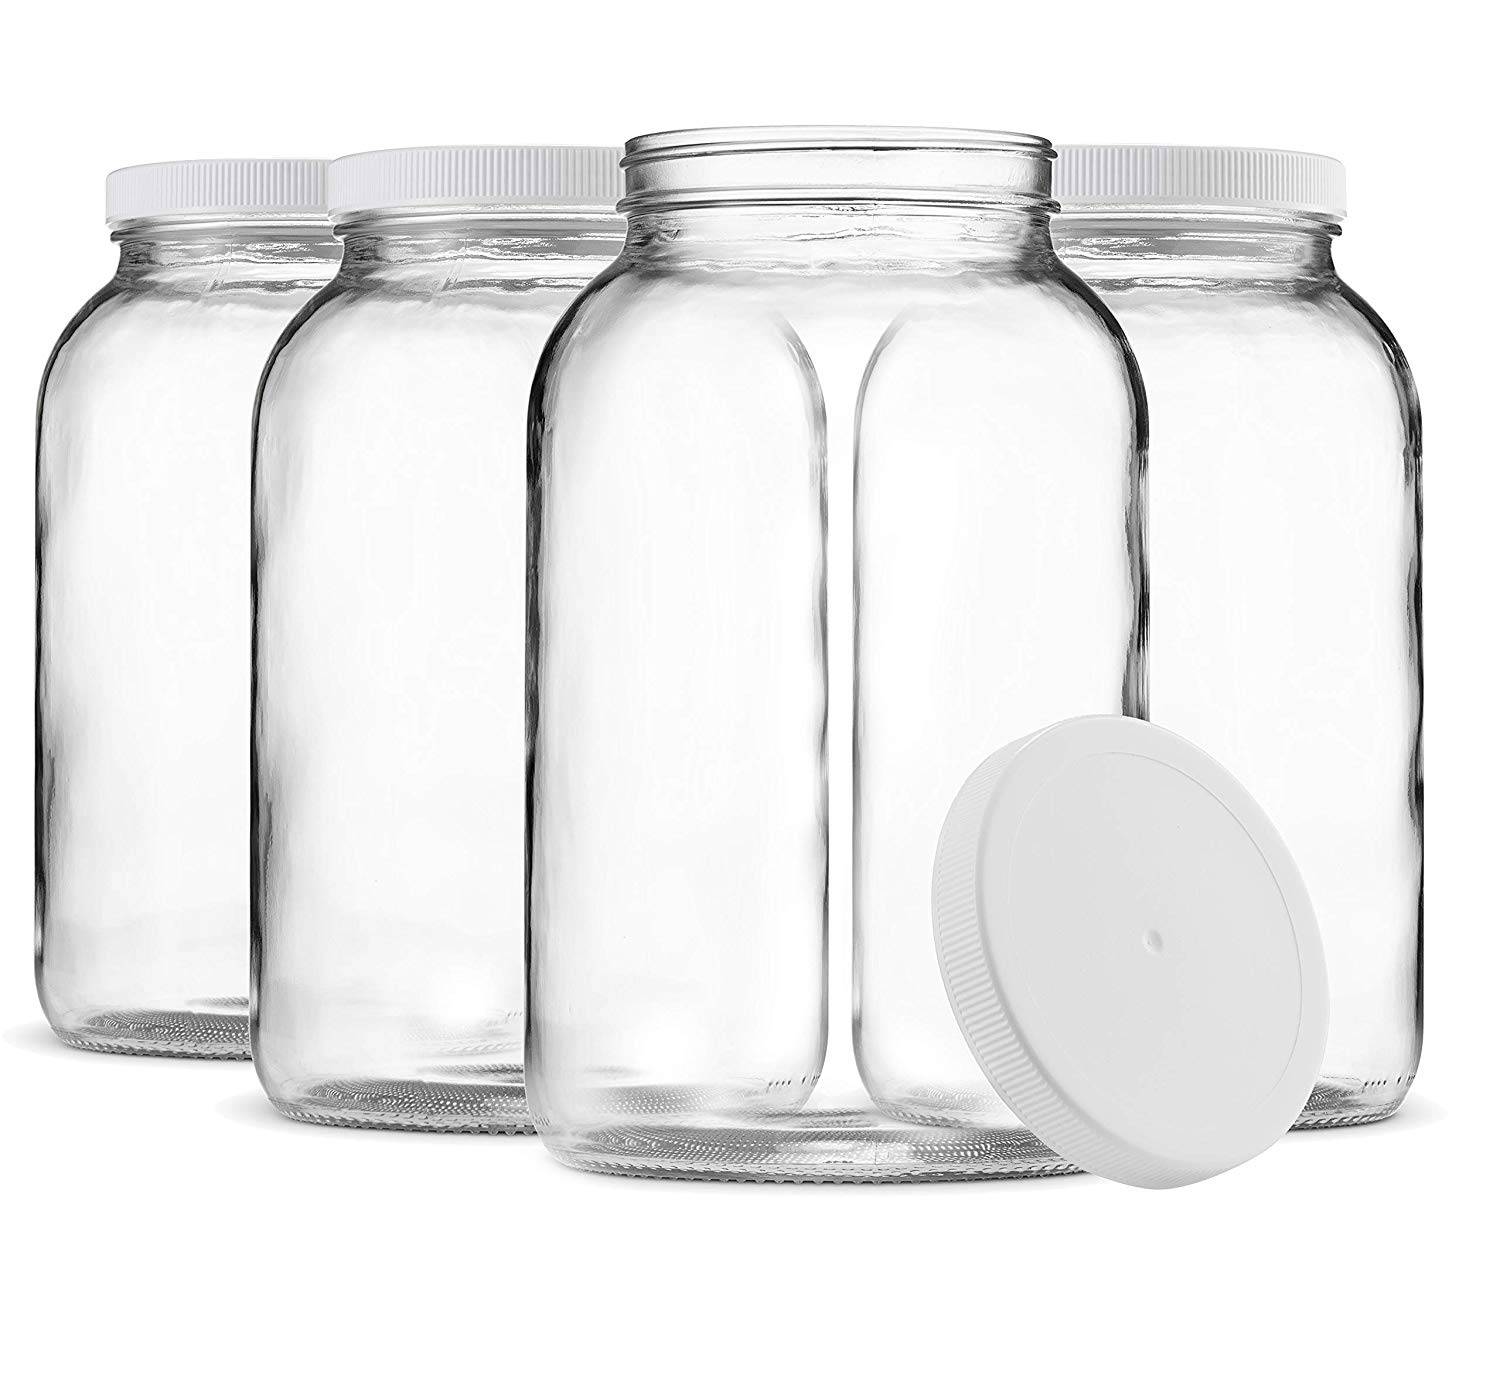 New Fashion Design for Square Glass Juice Bottle - 1 Gallon 3.75L  glass bottle jar – Credible